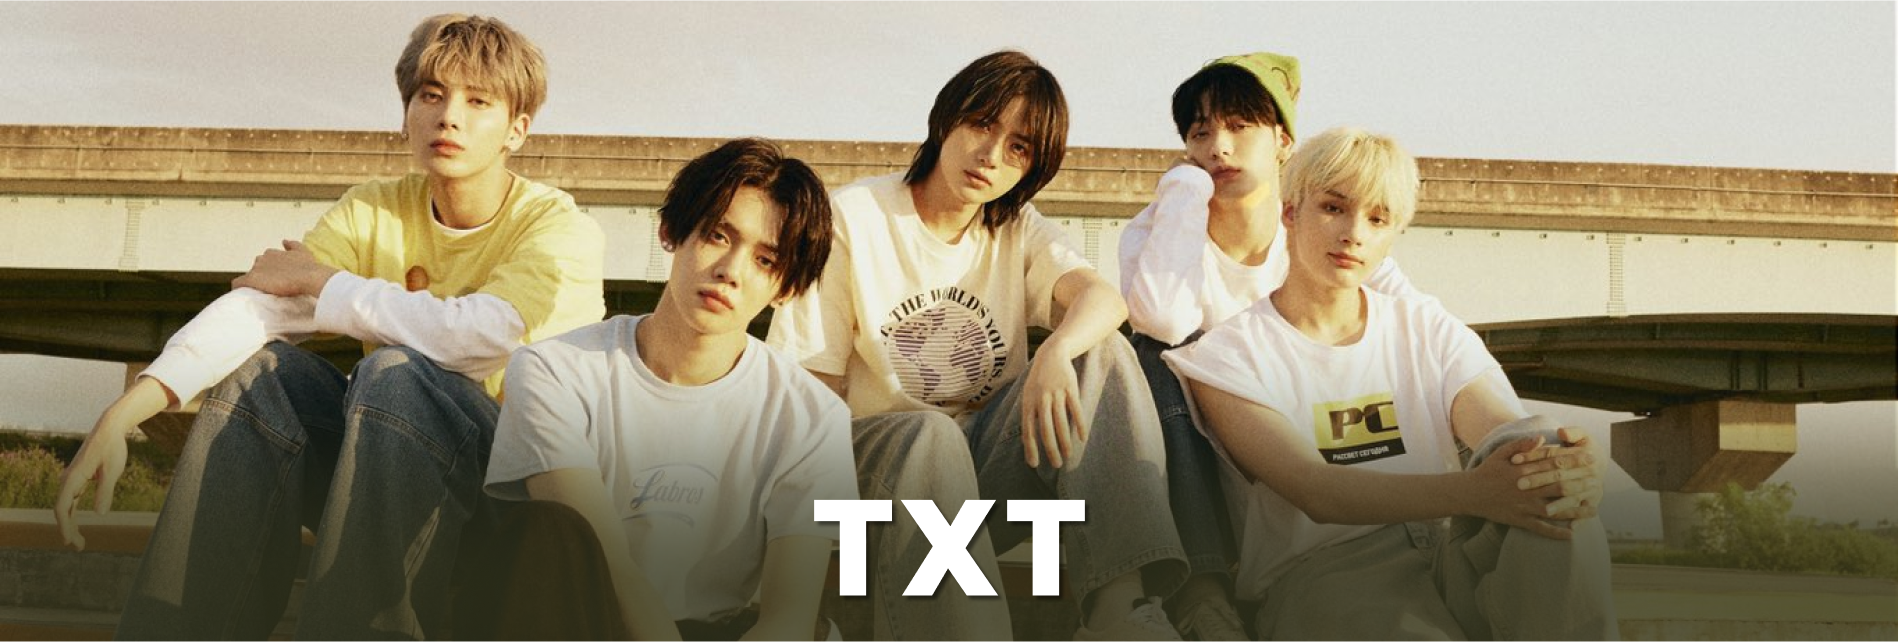 TXT group photo